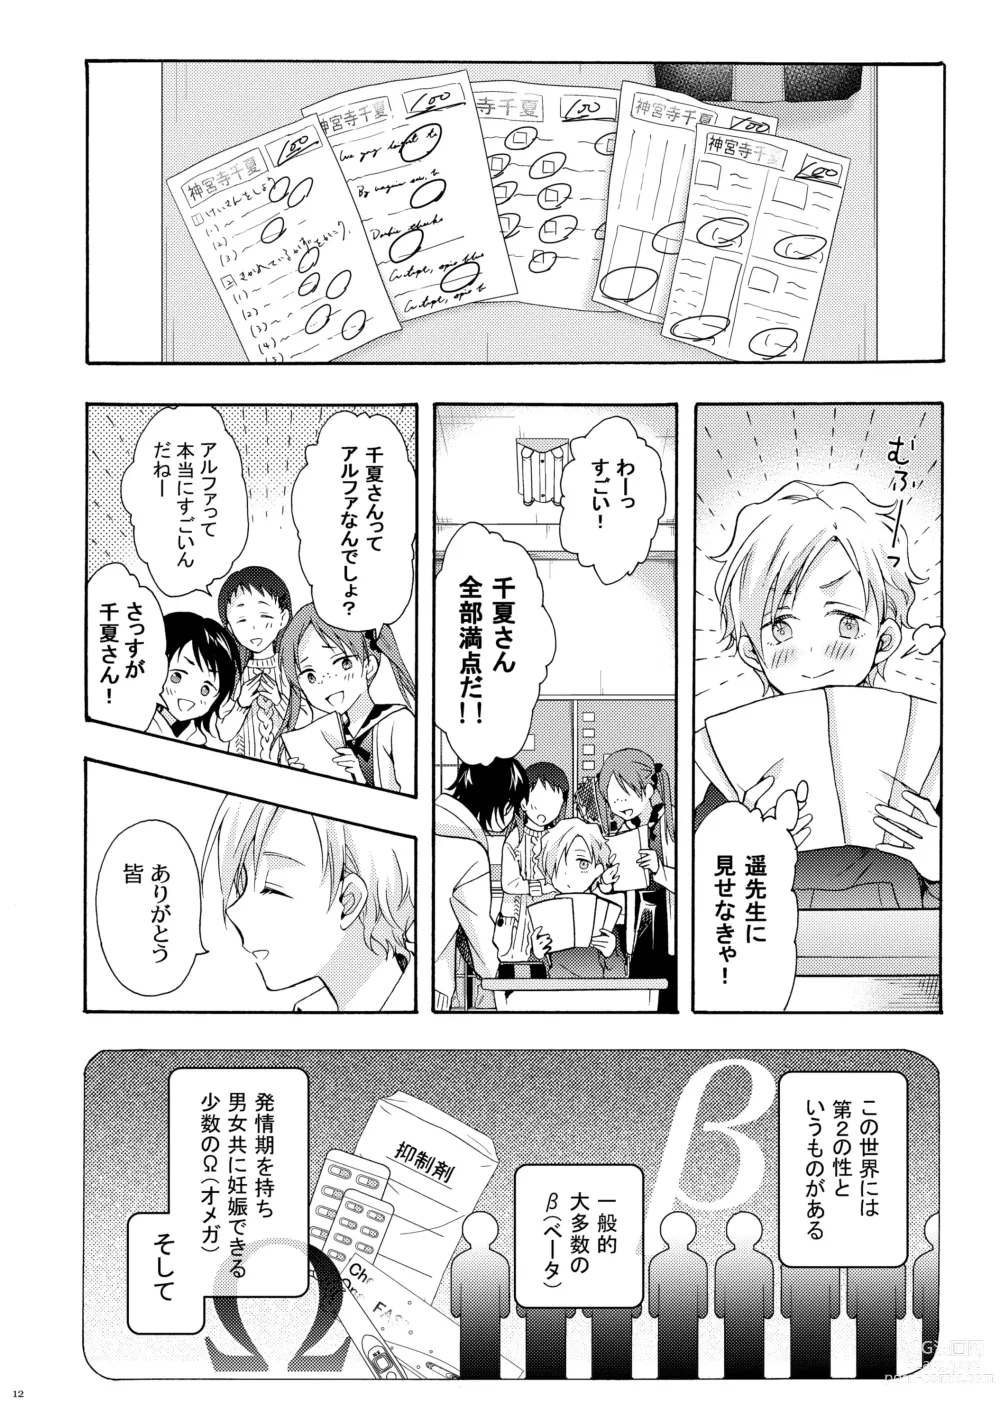 Page 11 of manga Boku no Tame no Omega